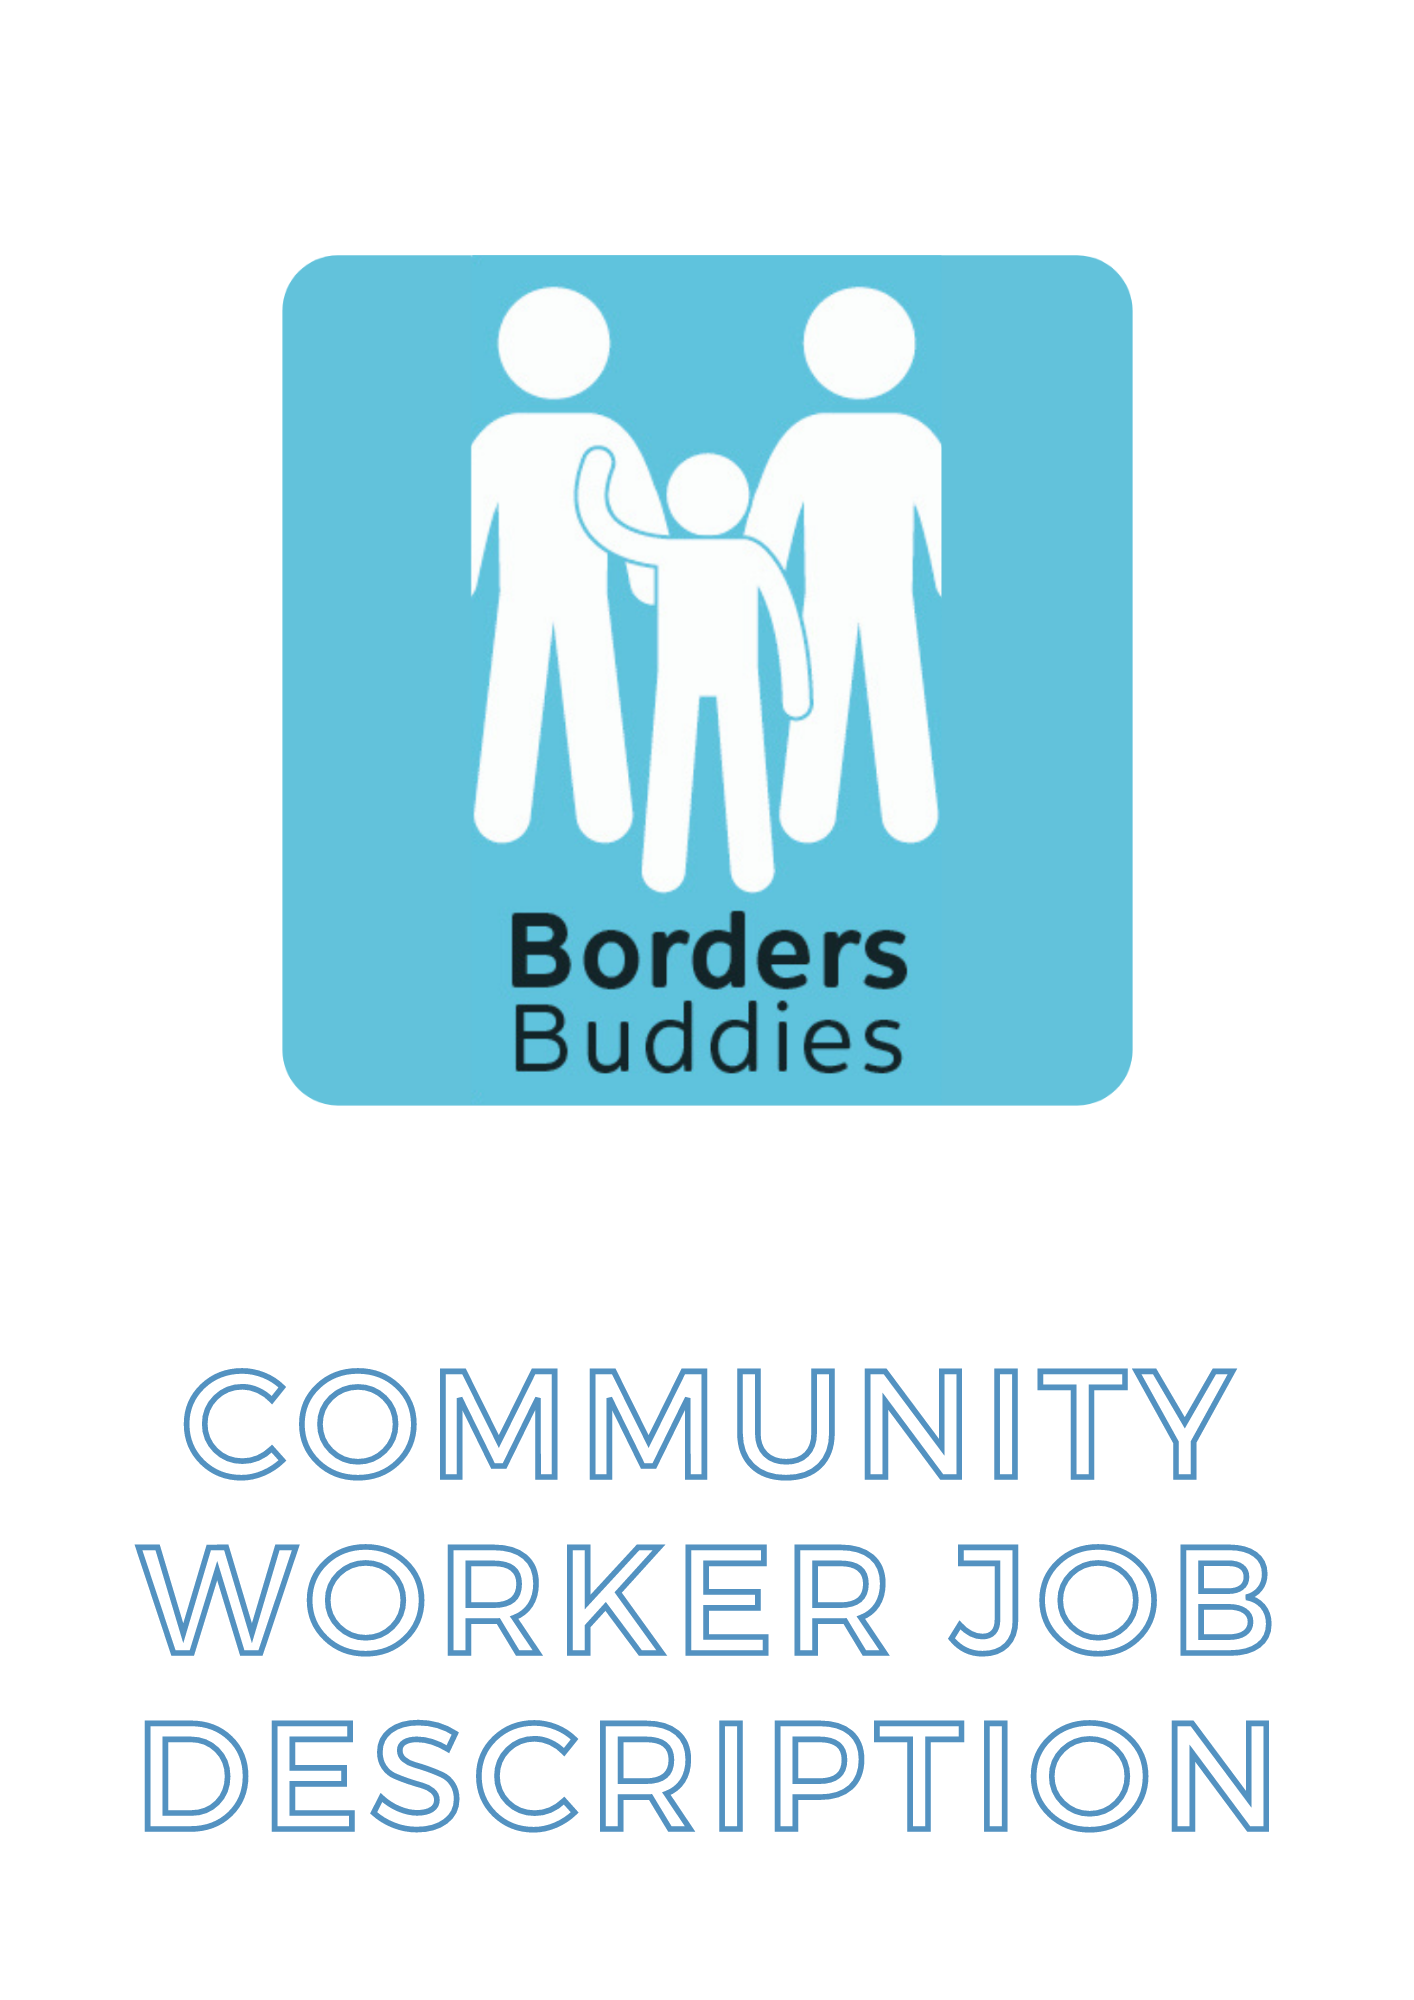 Community worker job description